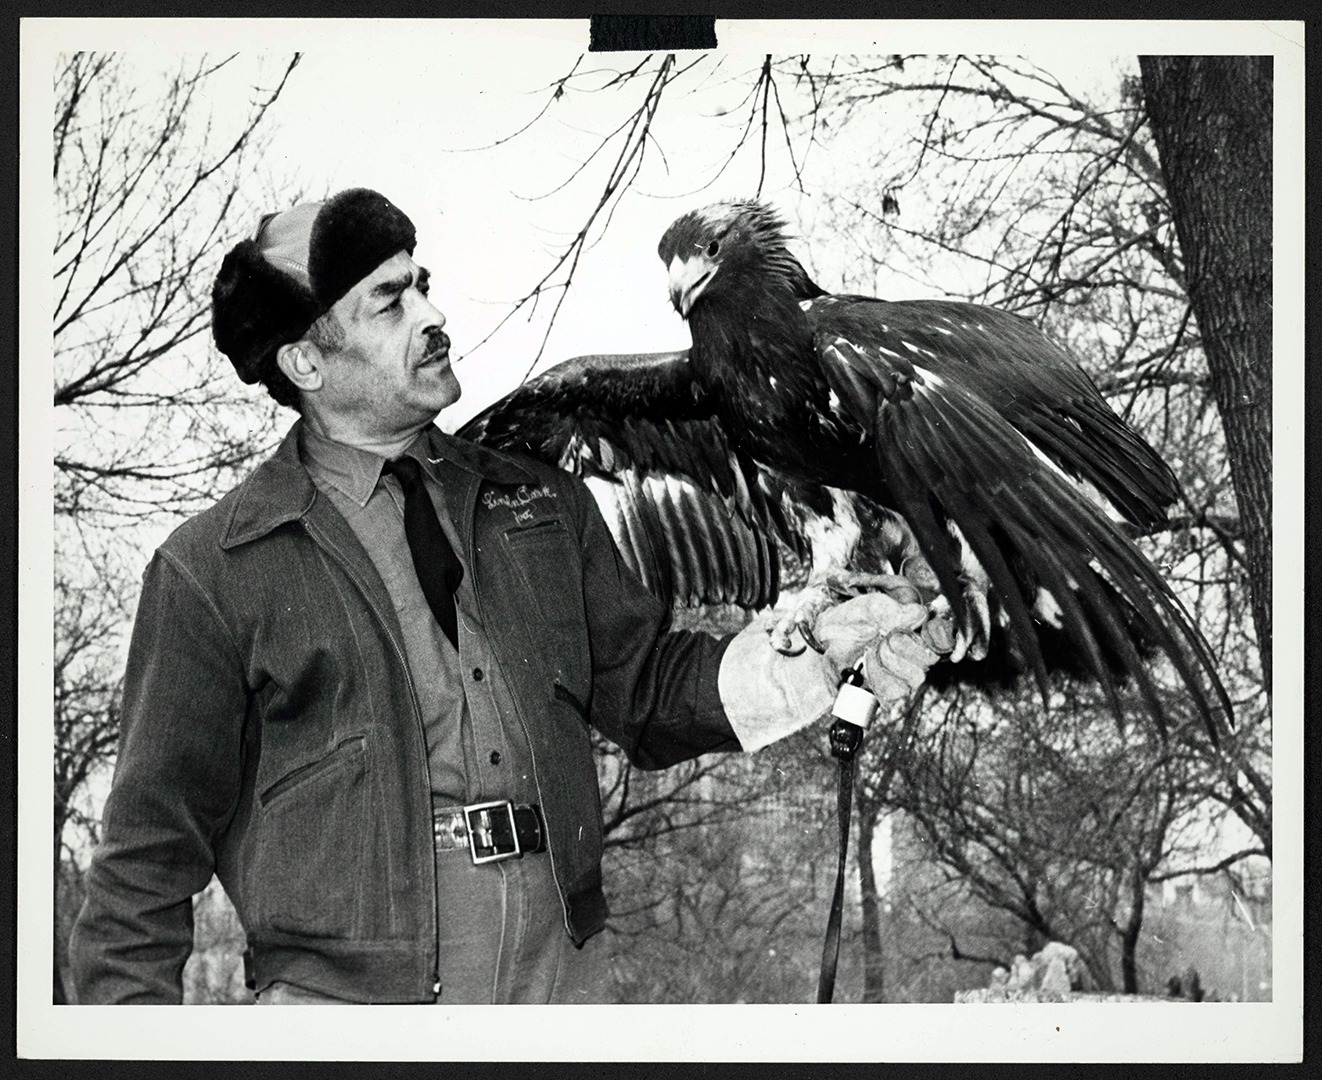 Animal keeper Joe Wilson with Golden eagle